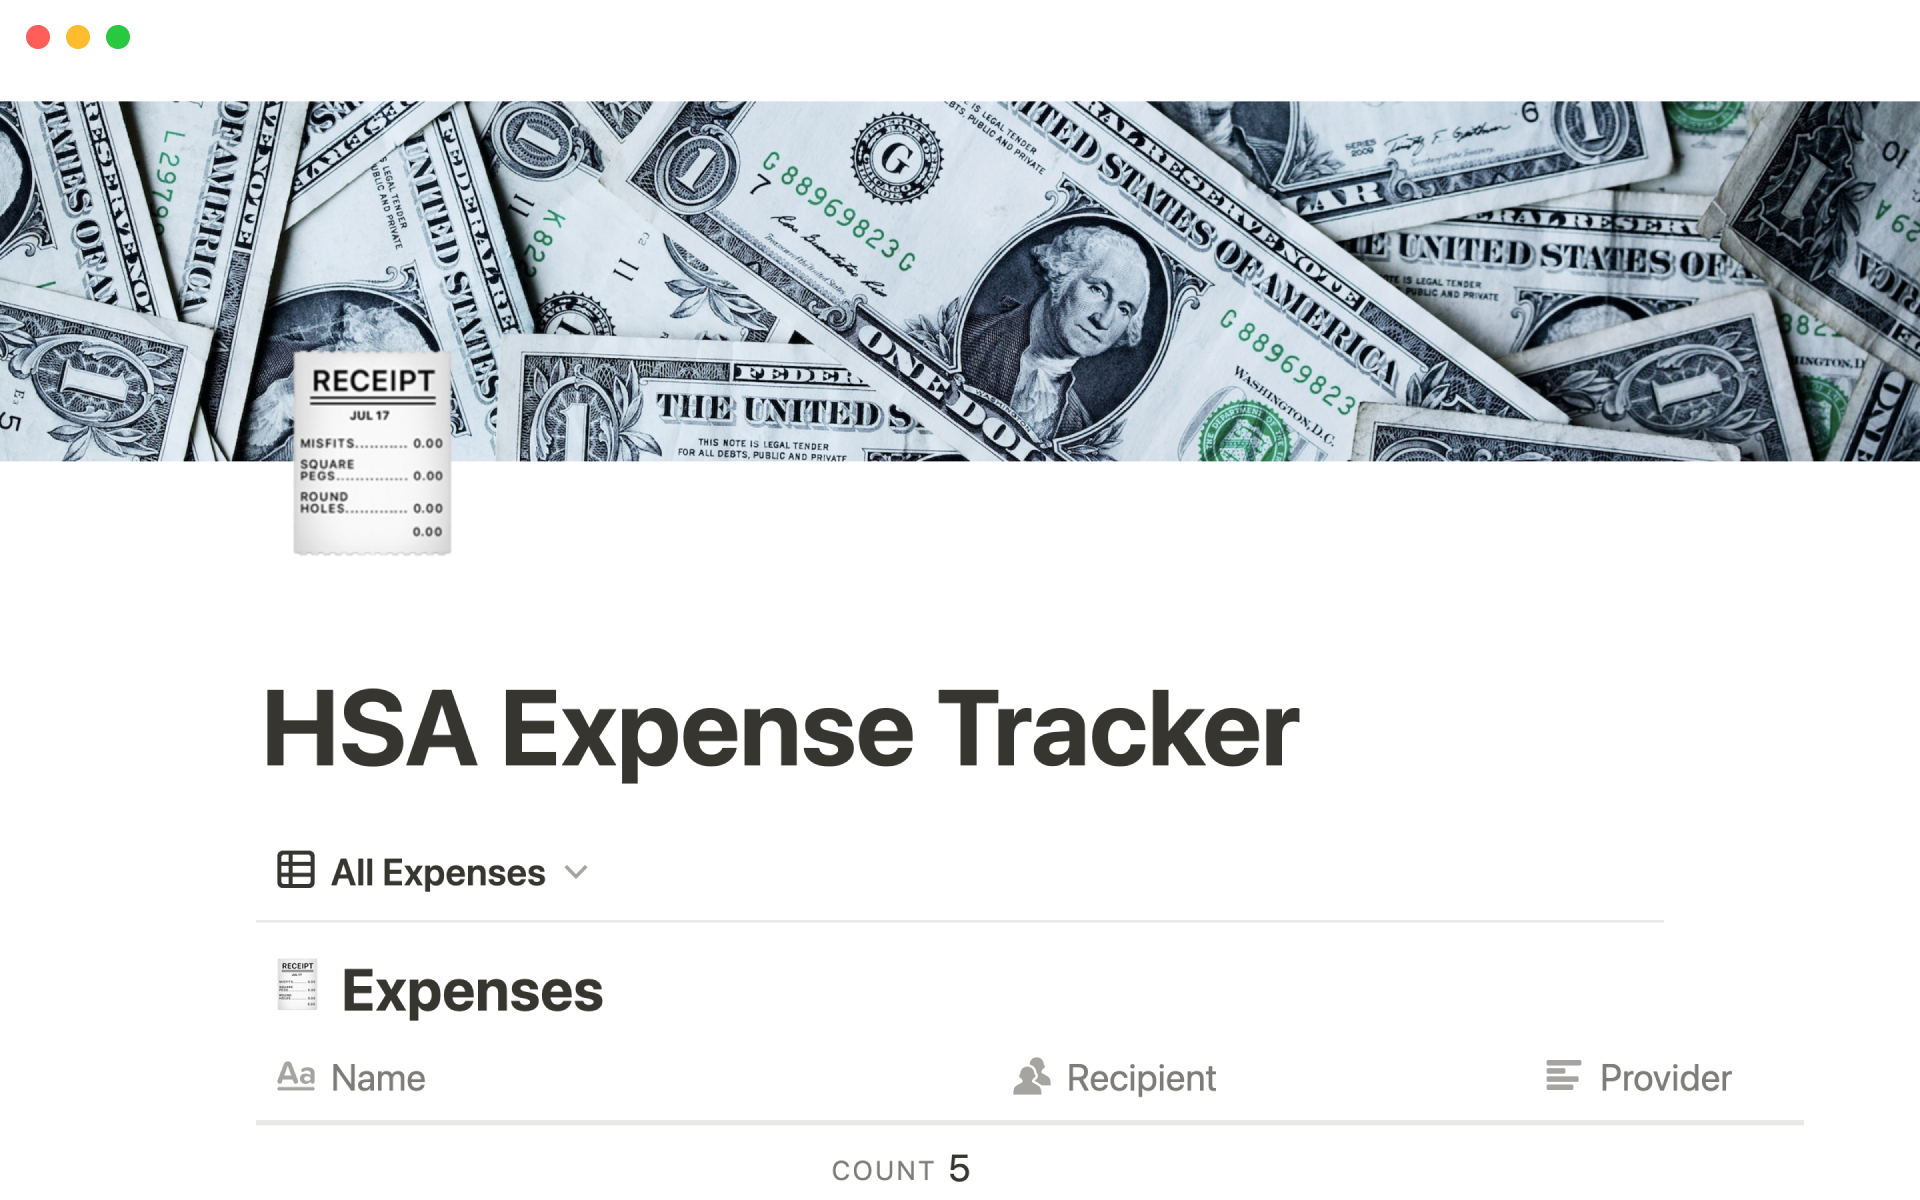 Vista previa de una plantilla para HSA expense tracker